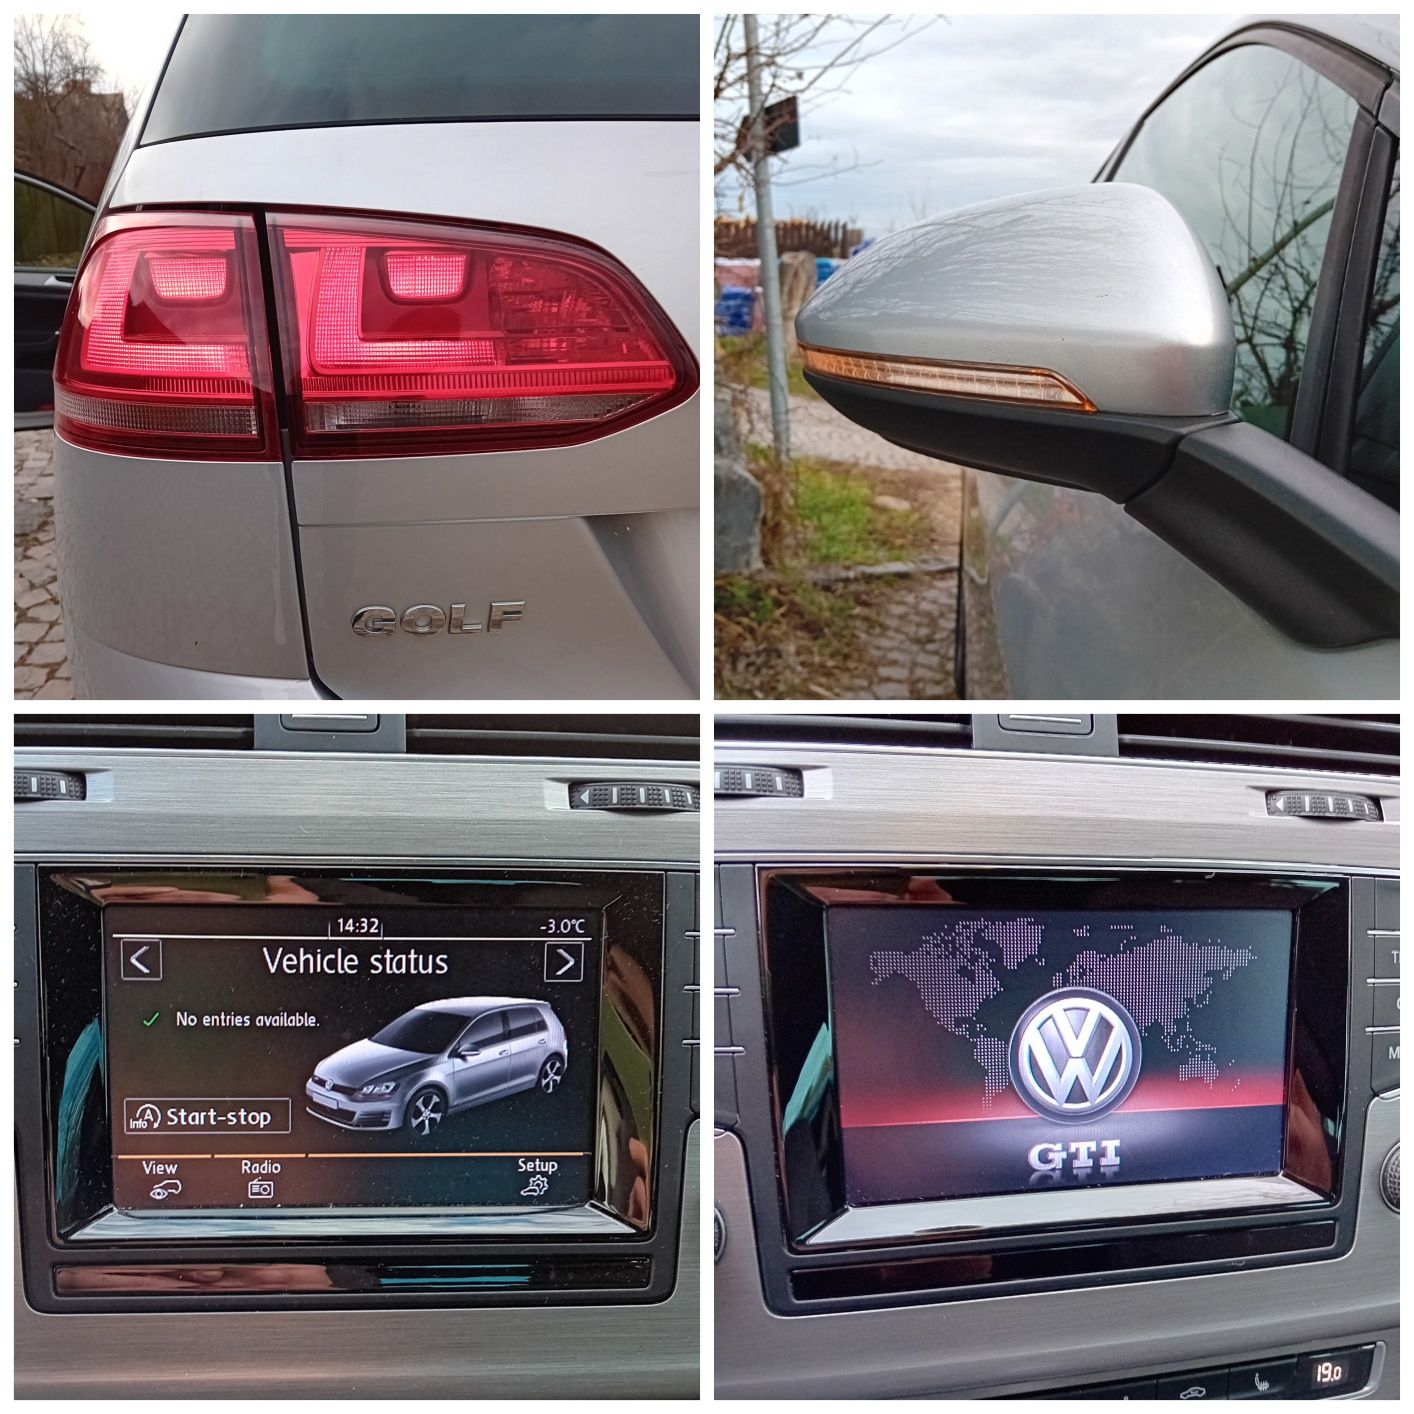 Volkswagen Golf 7 2015, 1.6 TDI 105 CP, 186.000 Km, RAR efectuat